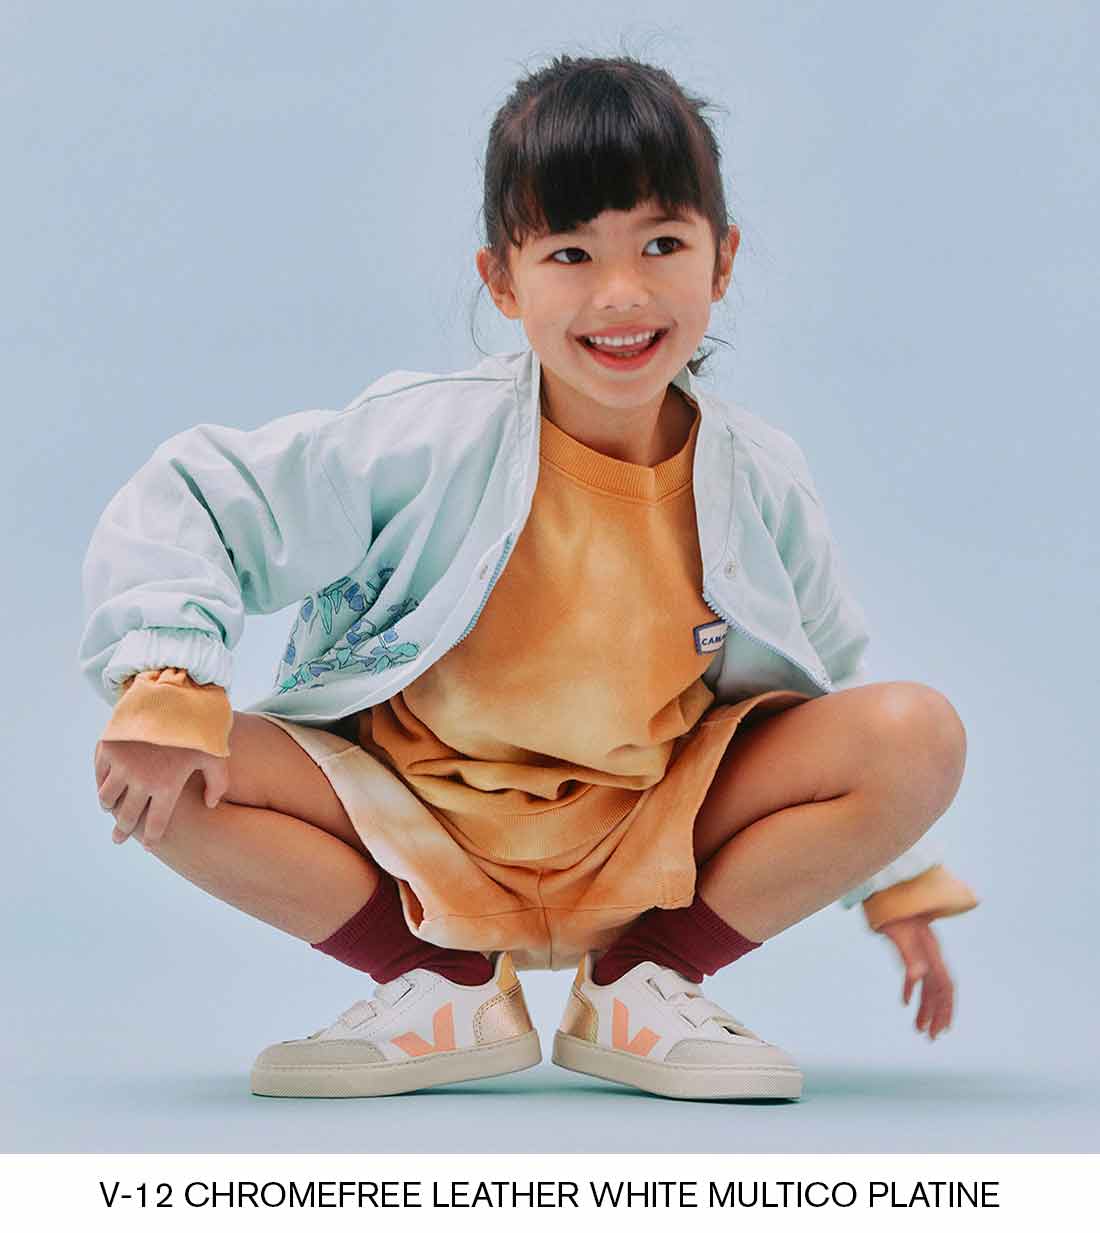 Little girl wearing shoes V-12 chromefree leather white multico platine